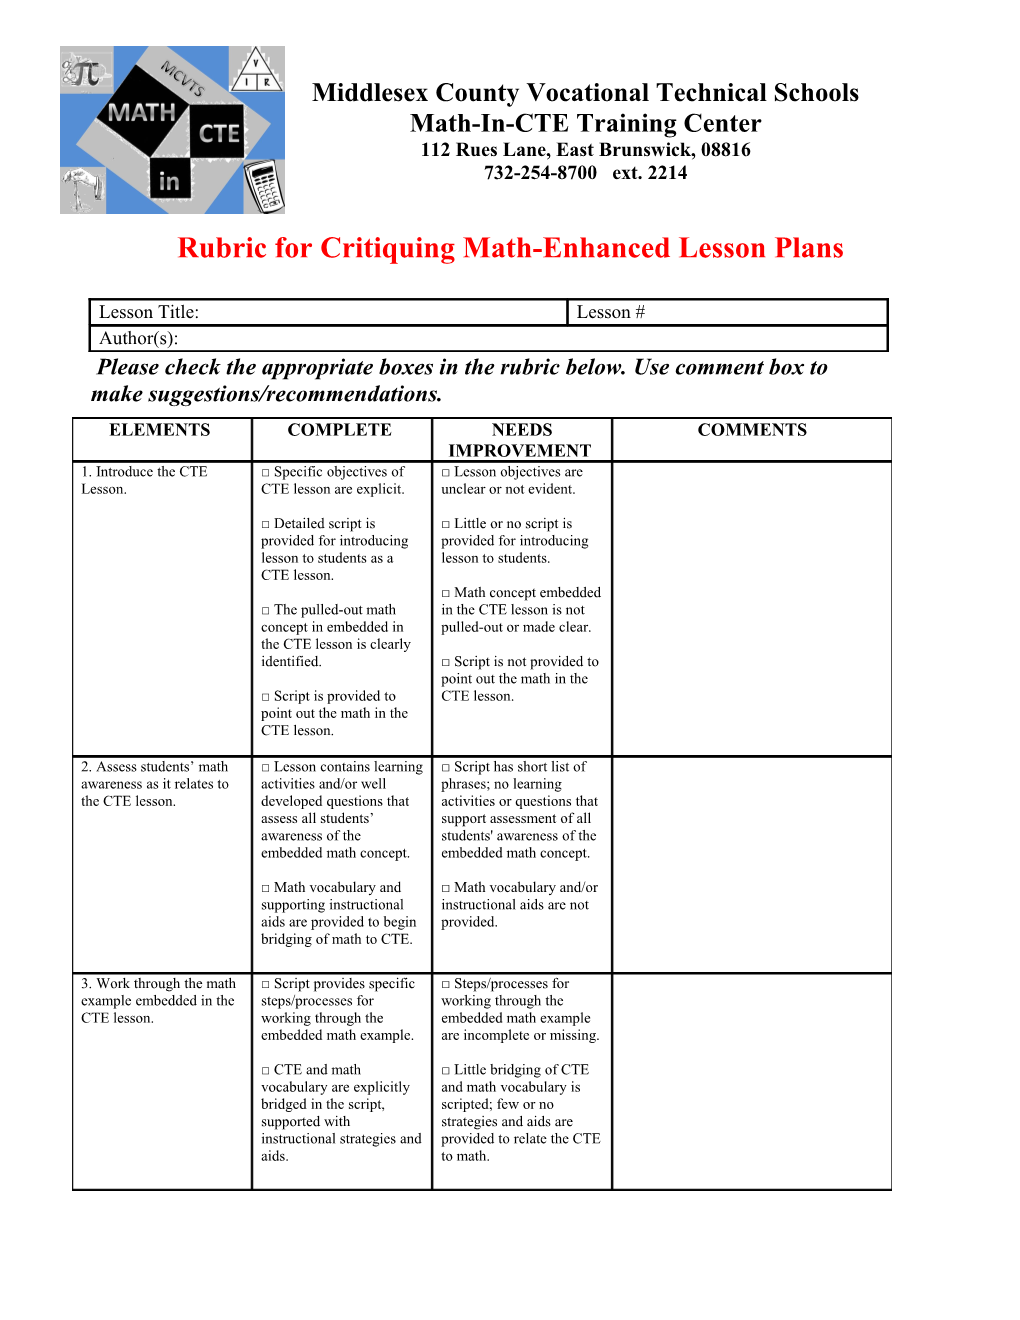 Rubric for Critiquing Math-Enhanced Lesson Plans